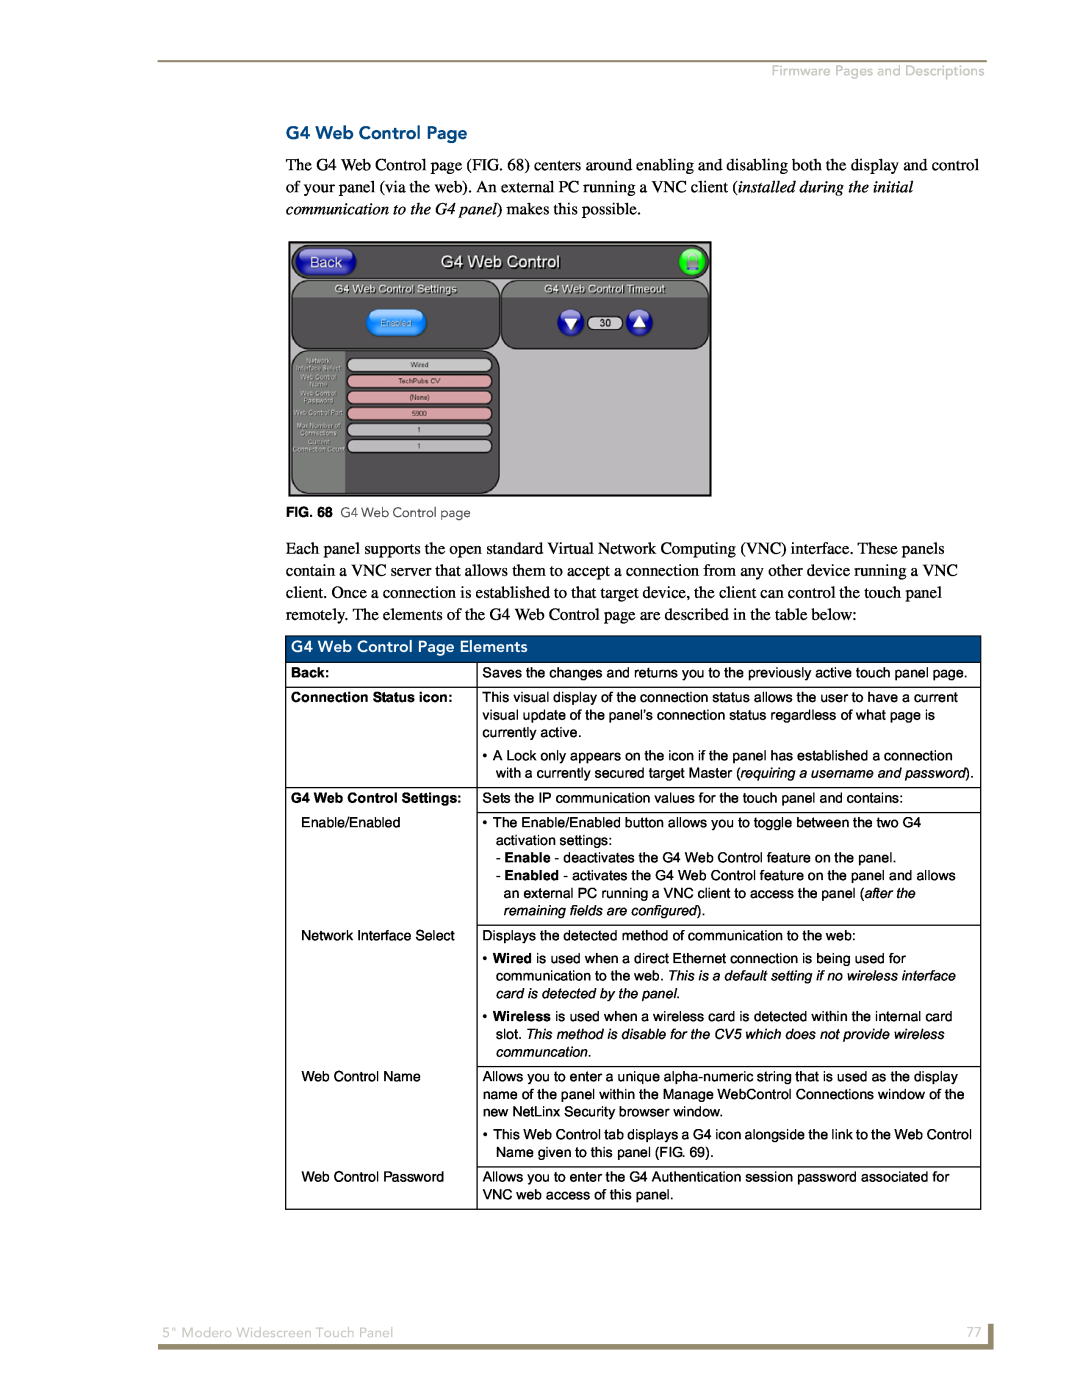 AMX NXD-CV5 G4 Web Control Page Elements, Firmware Pages and Descriptions, Back, Connection Status icon, communcation 